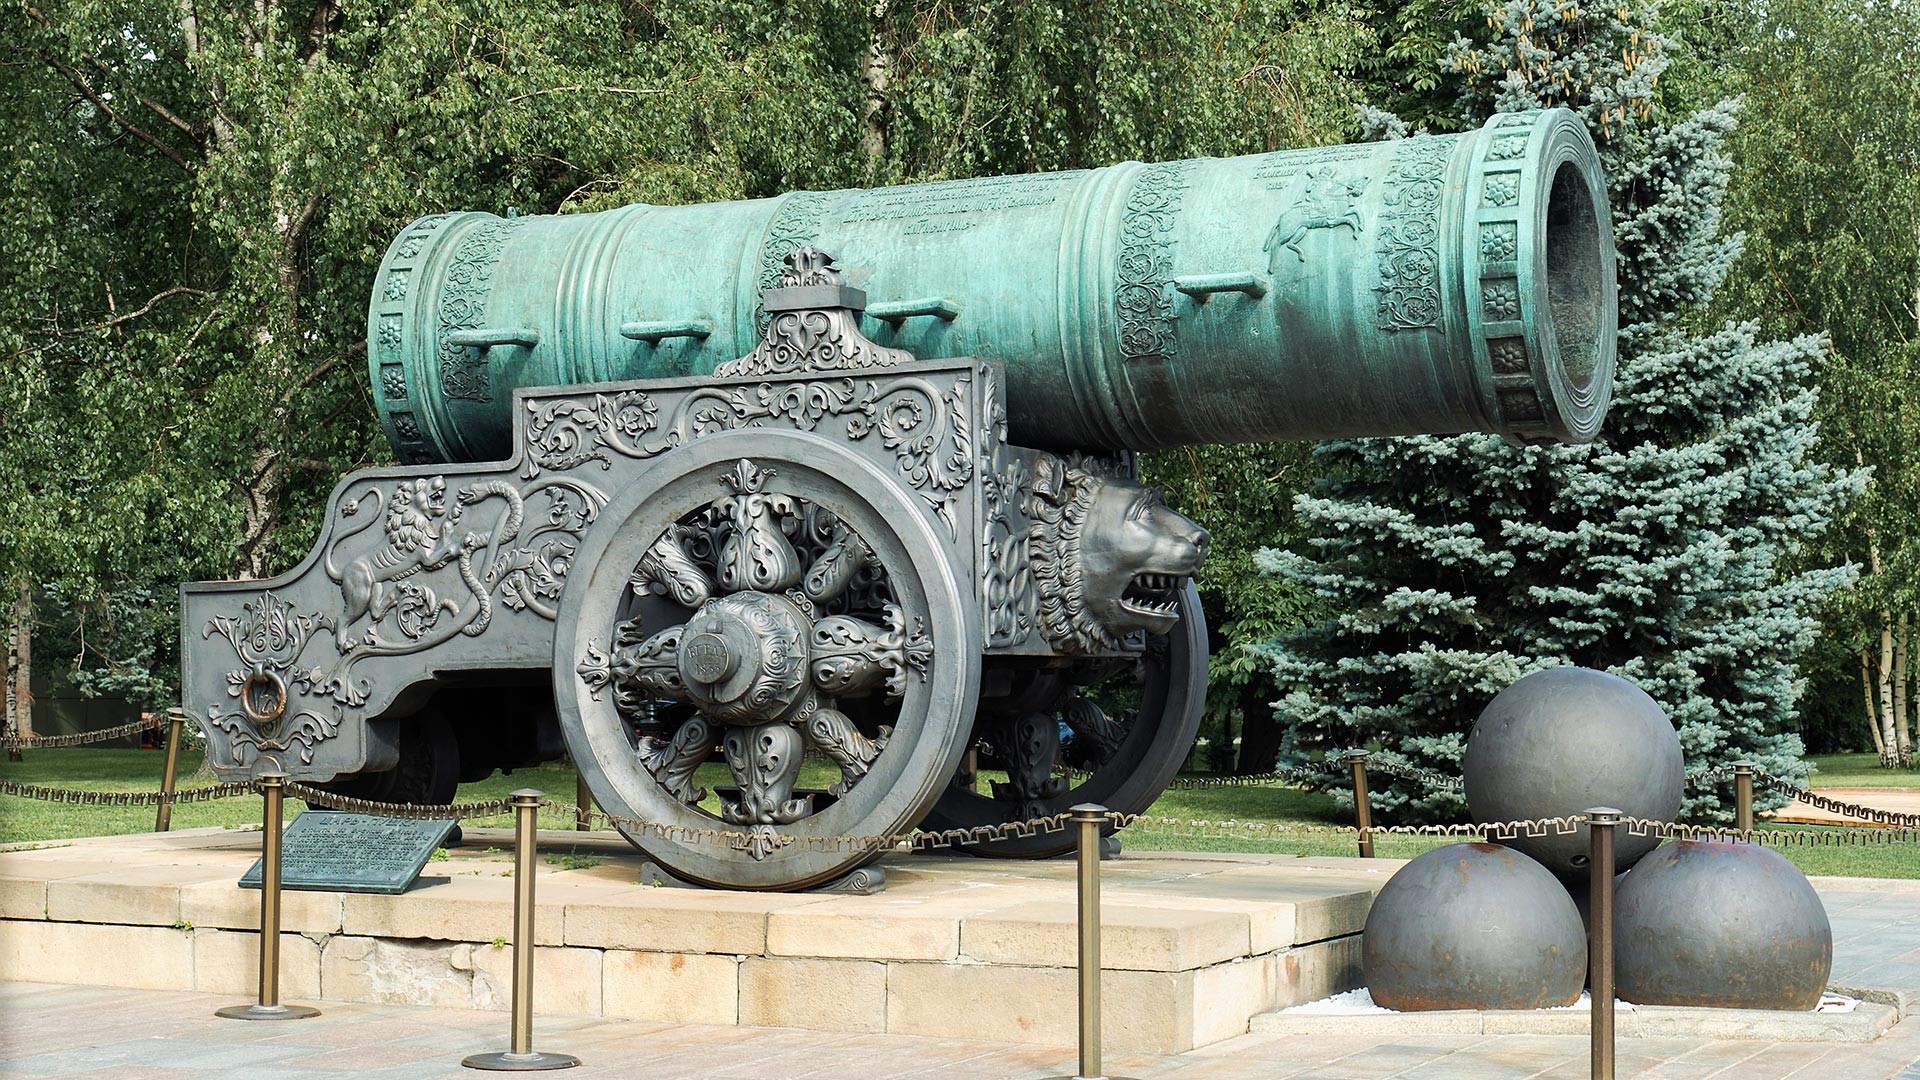 The Tsar Cannon at the Kremlin, Moscow